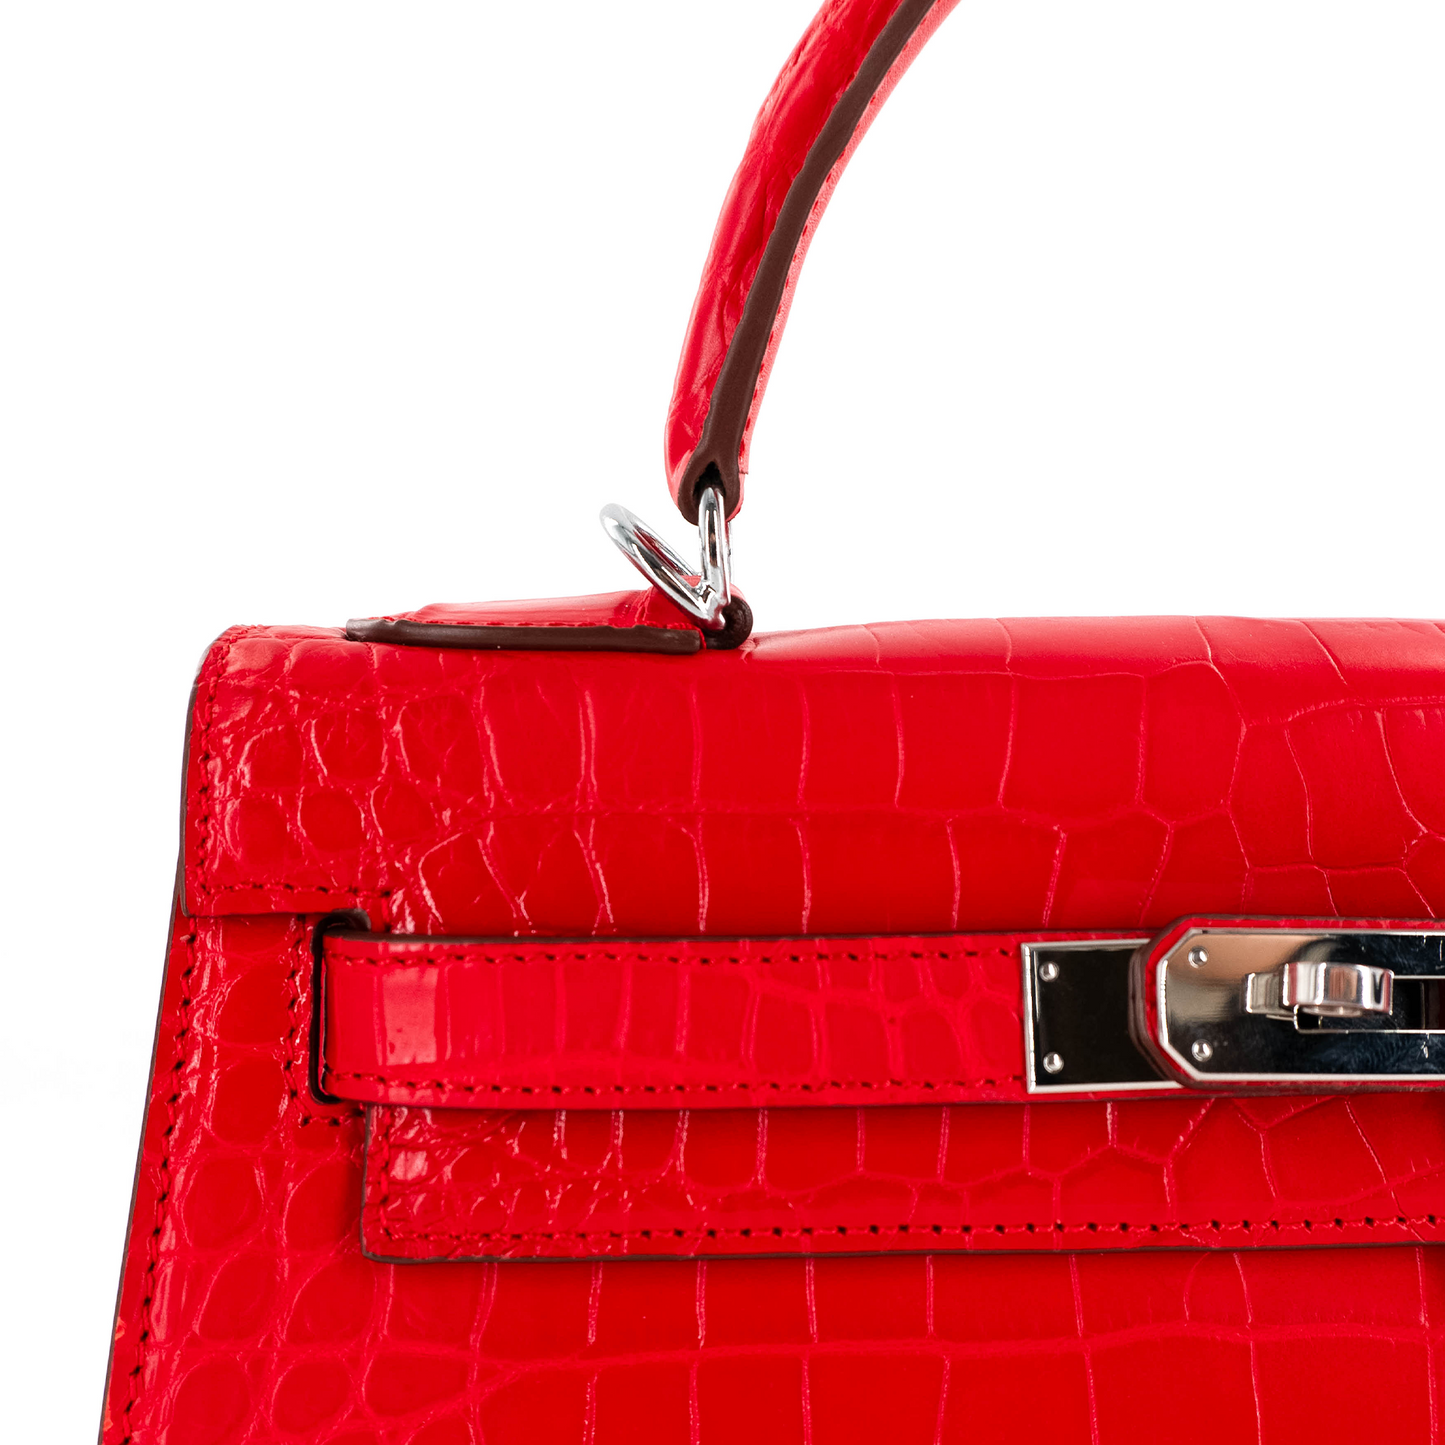 Princess Handbag in Matte Red Crocodile Belly Skin